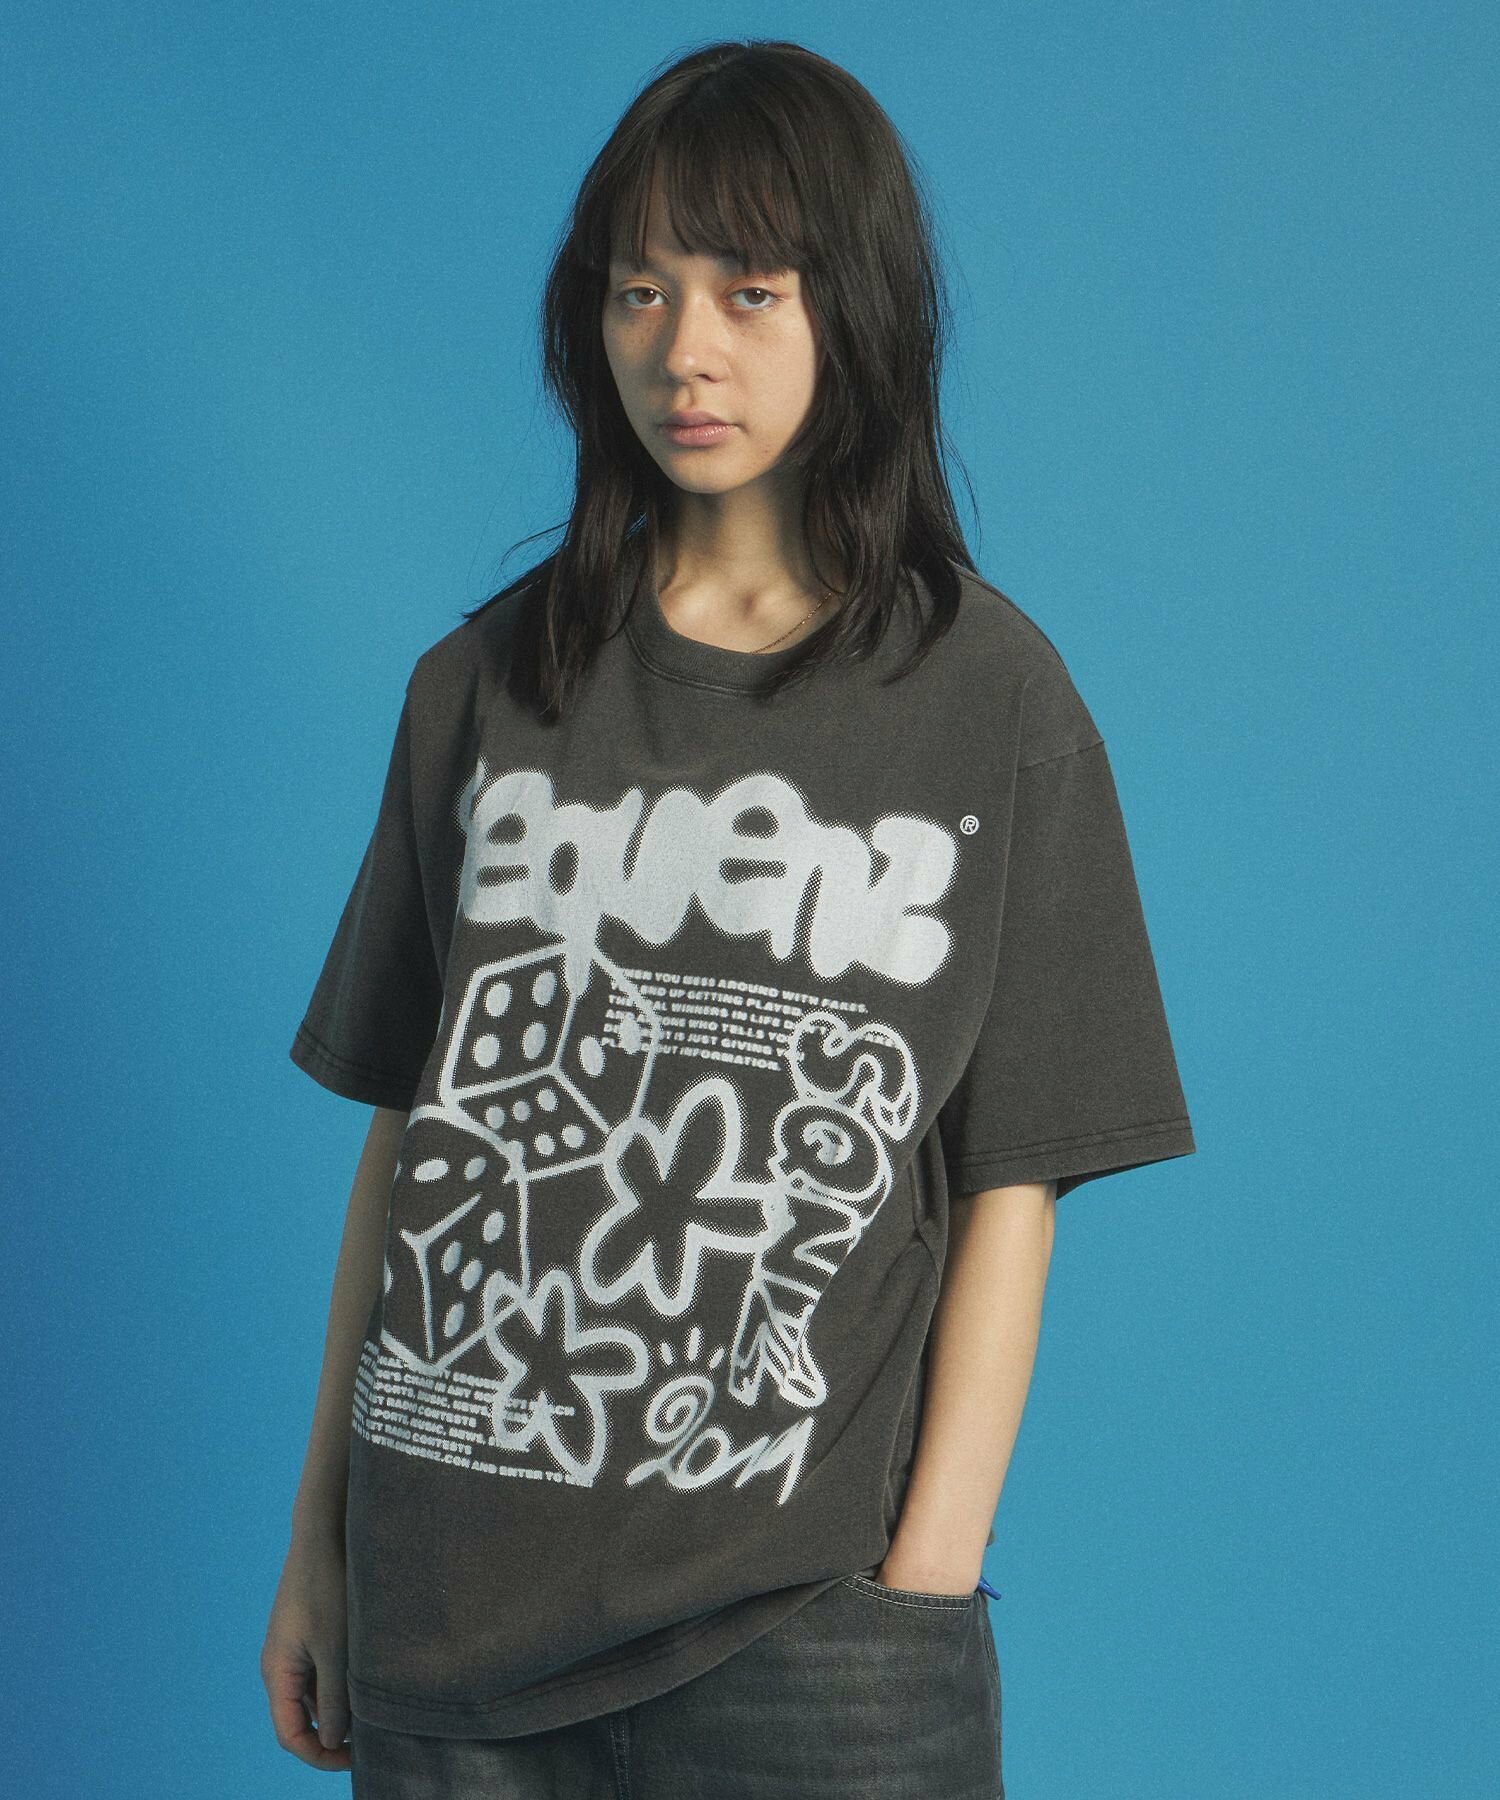 【SEQUENZ】NVL EX COOLAGE SST / 半袖Tシャツ クルーネック ブランドロゴ ハードバイオ ダイス フラワー